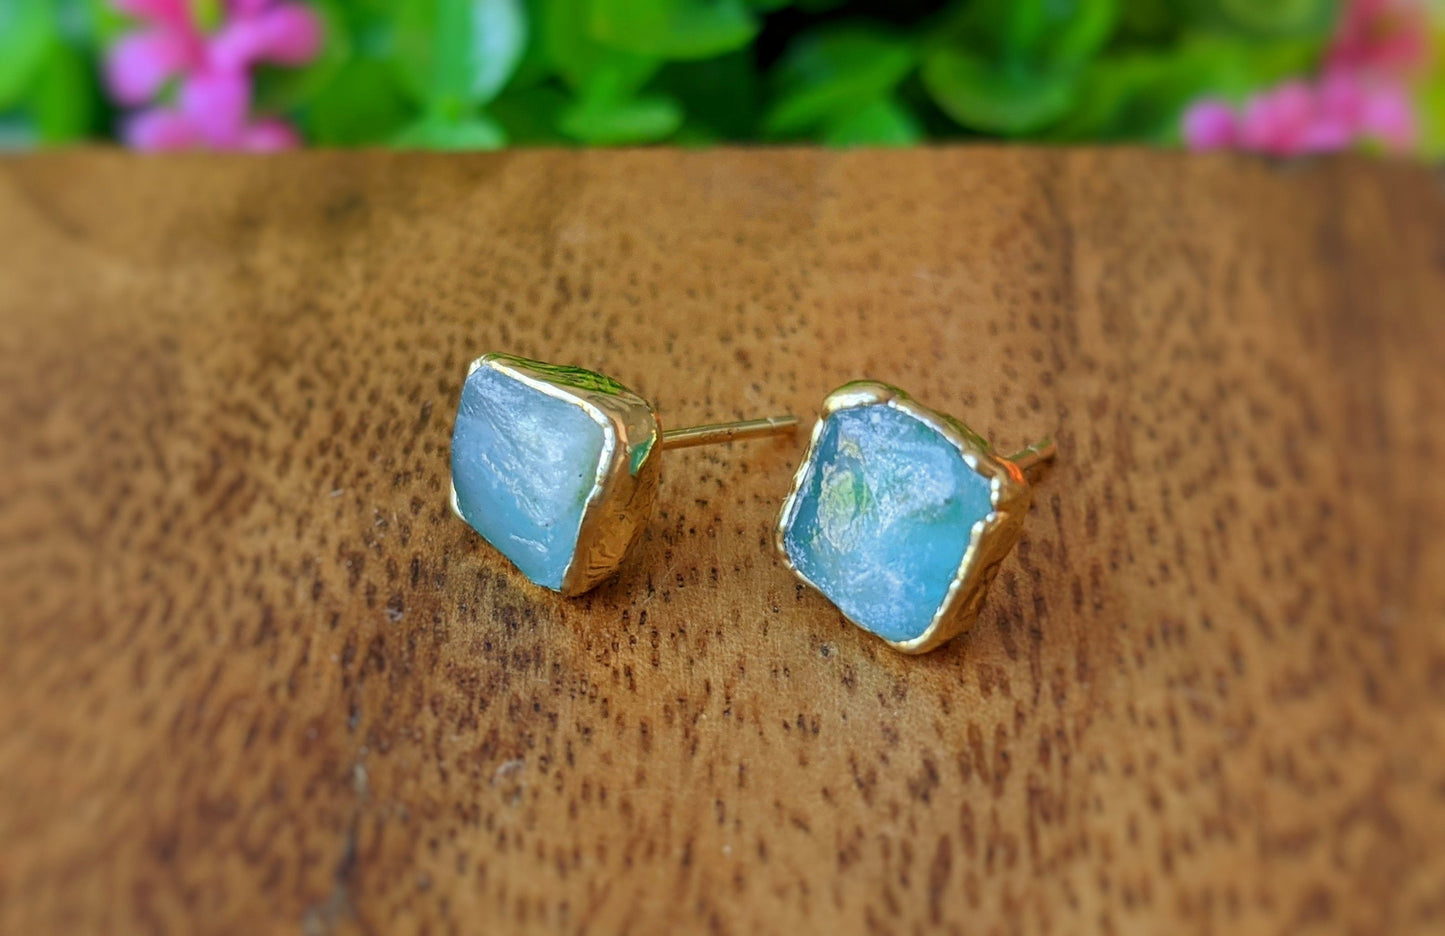 Raw Aqua Blue Peruvian Opal stud earrings in unique 18k Gold setting